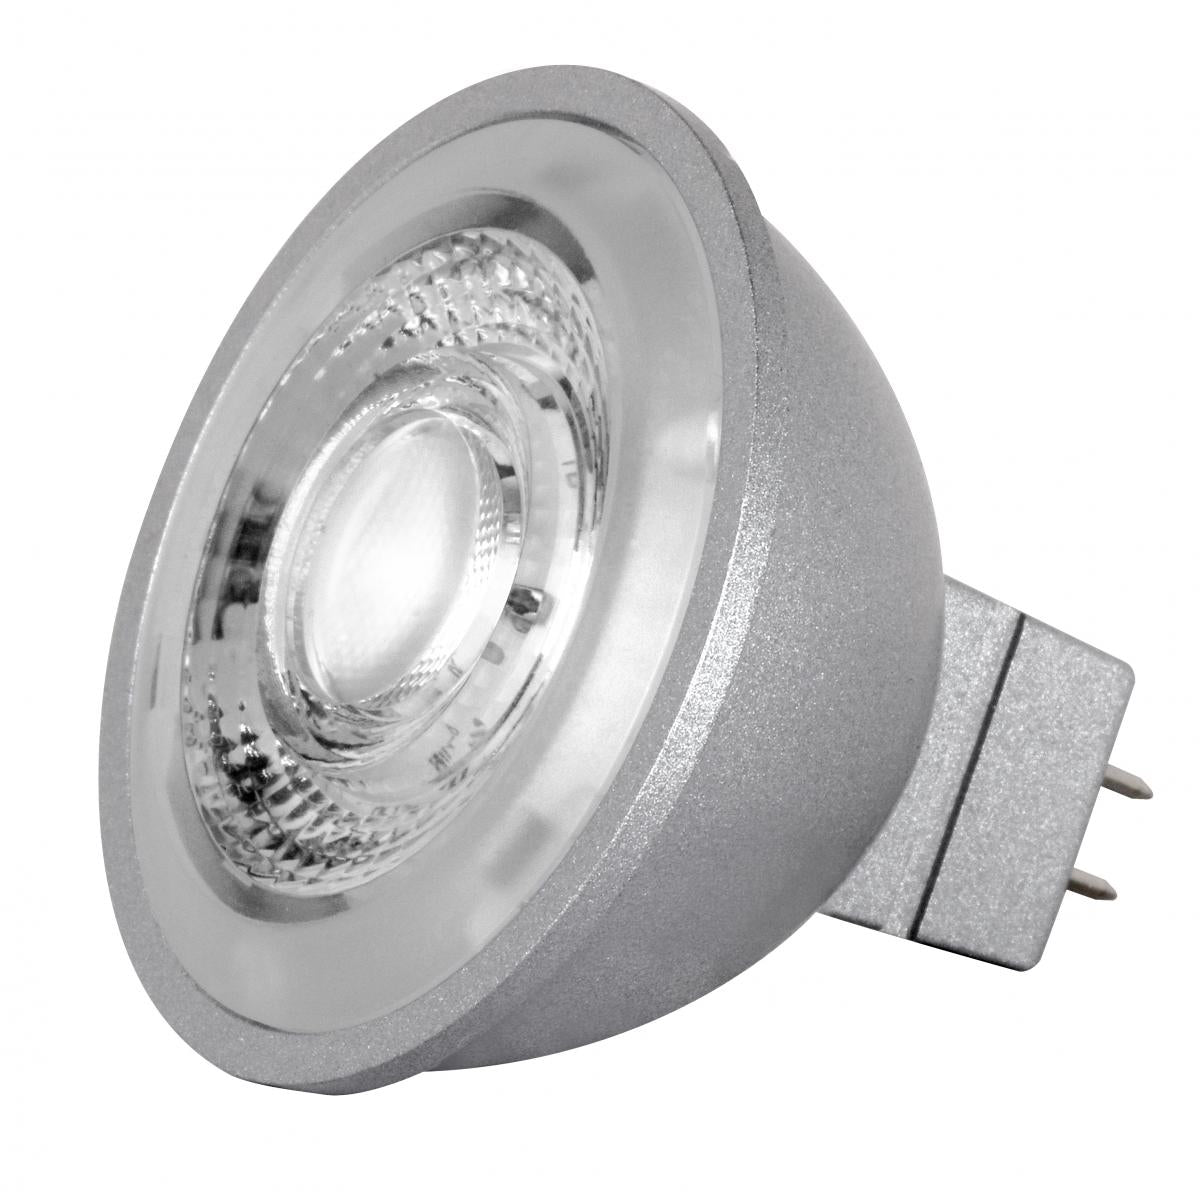 MR16 Reflector LED bulb, 8 watt, 490 Lumens, 4000K, GU5.3 Base, 40 Deg. Flood